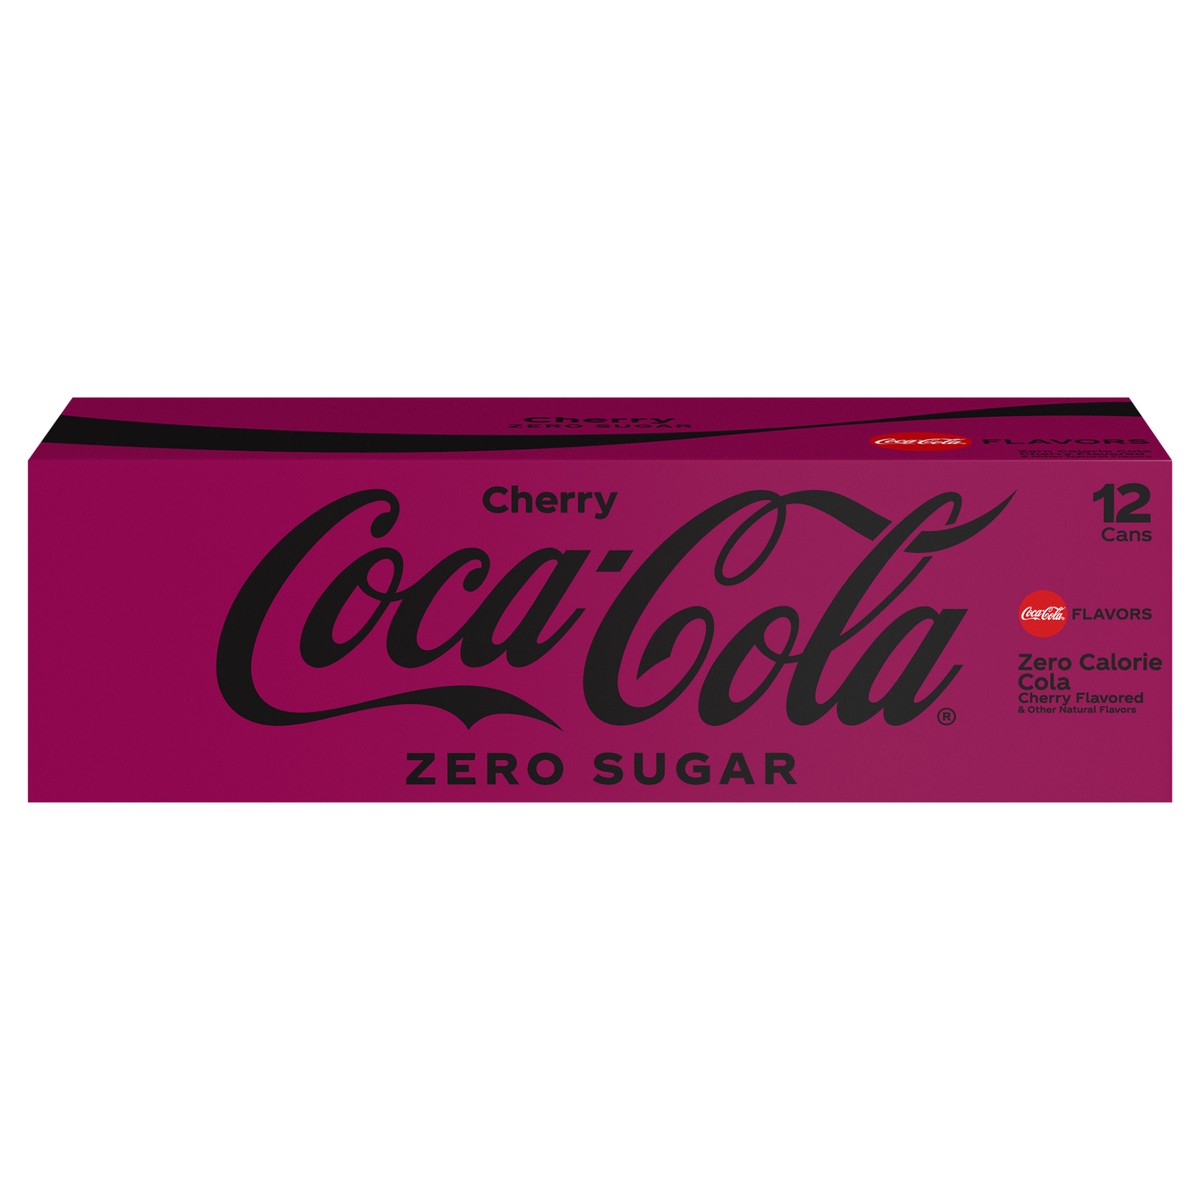 slide 1 of 173, Coca-Cola Cherry Zero Fridge Pack Cans, 12 fl oz, 12 Pack, 12 ct